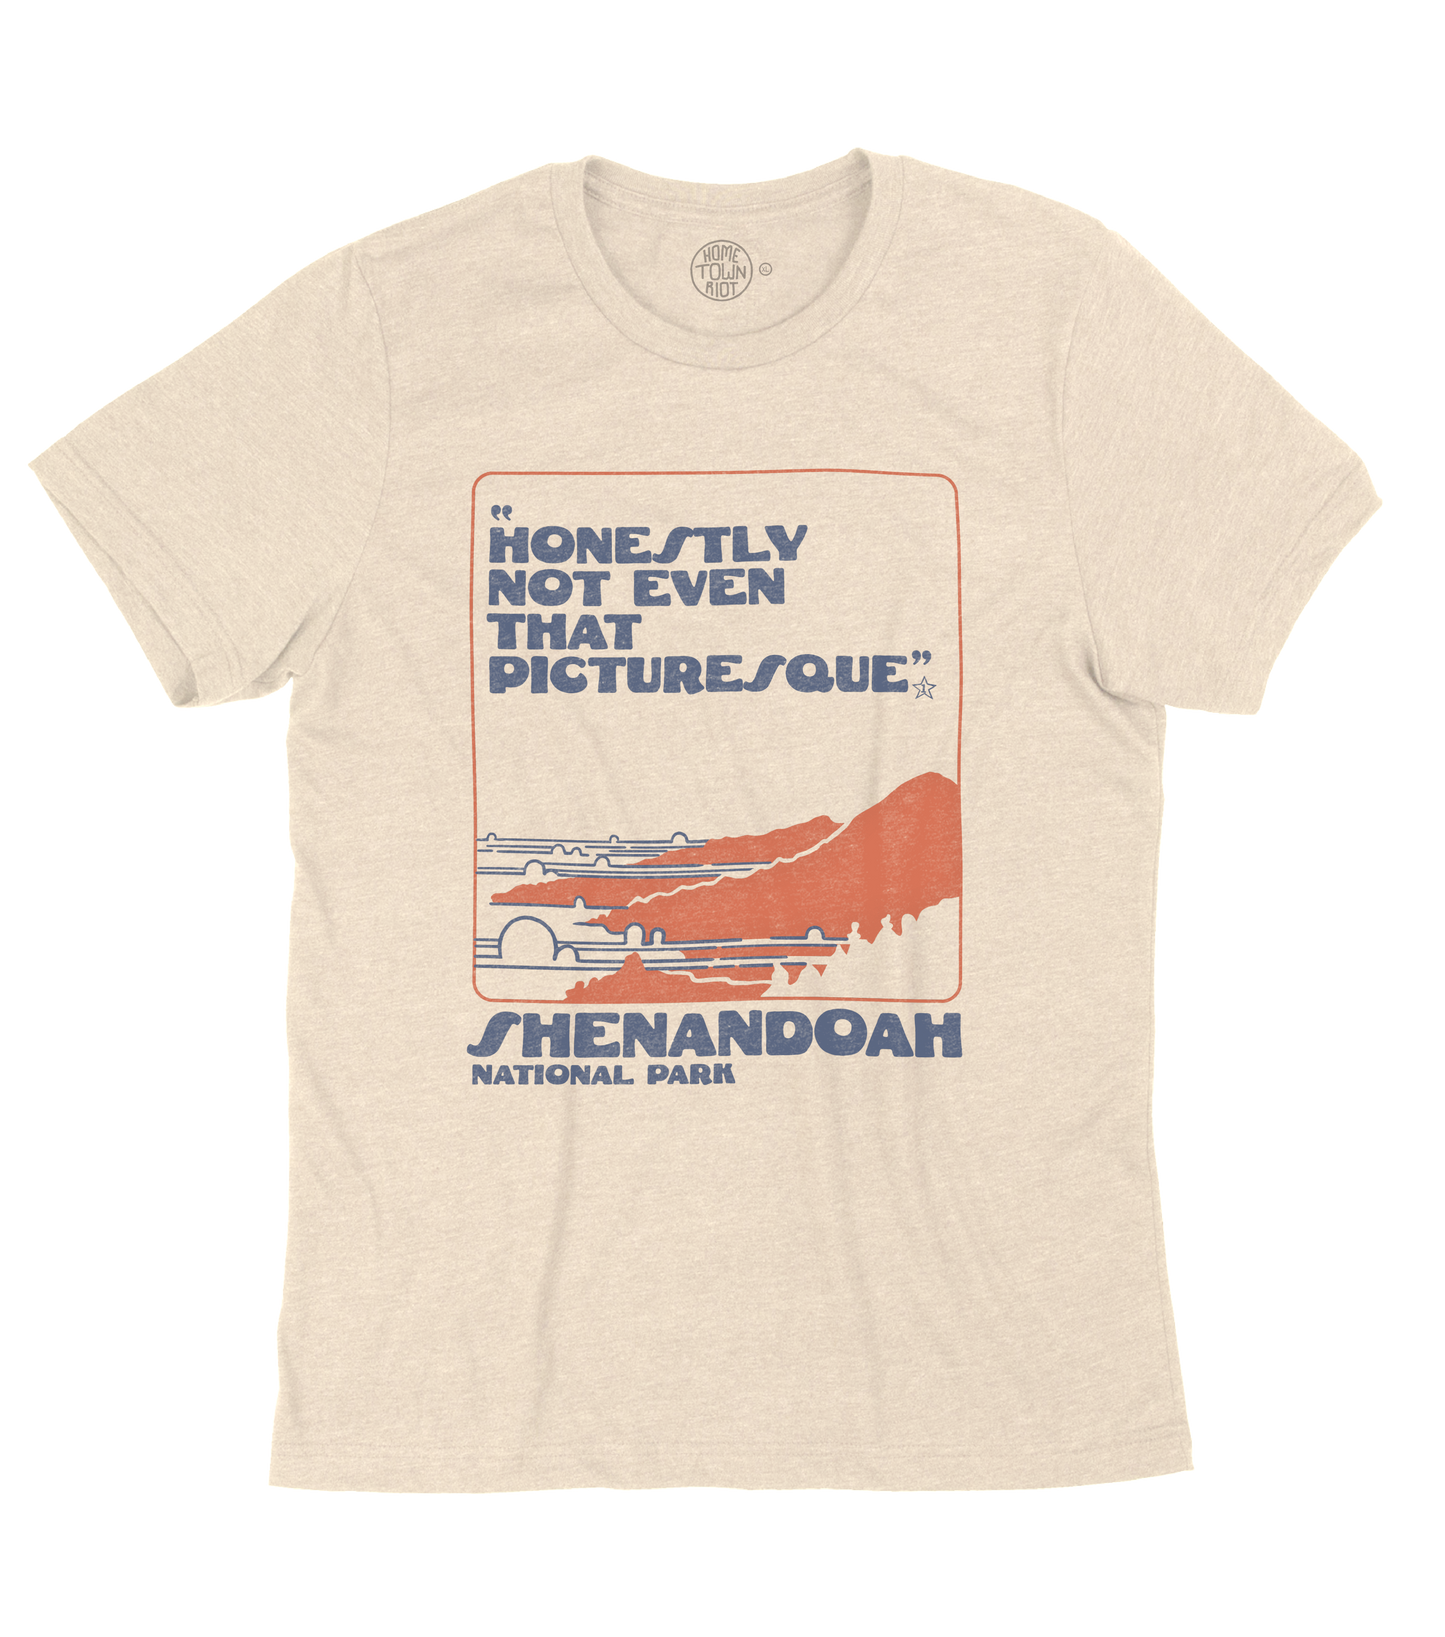 Shenandoah National Park 1 Star Review Shirt